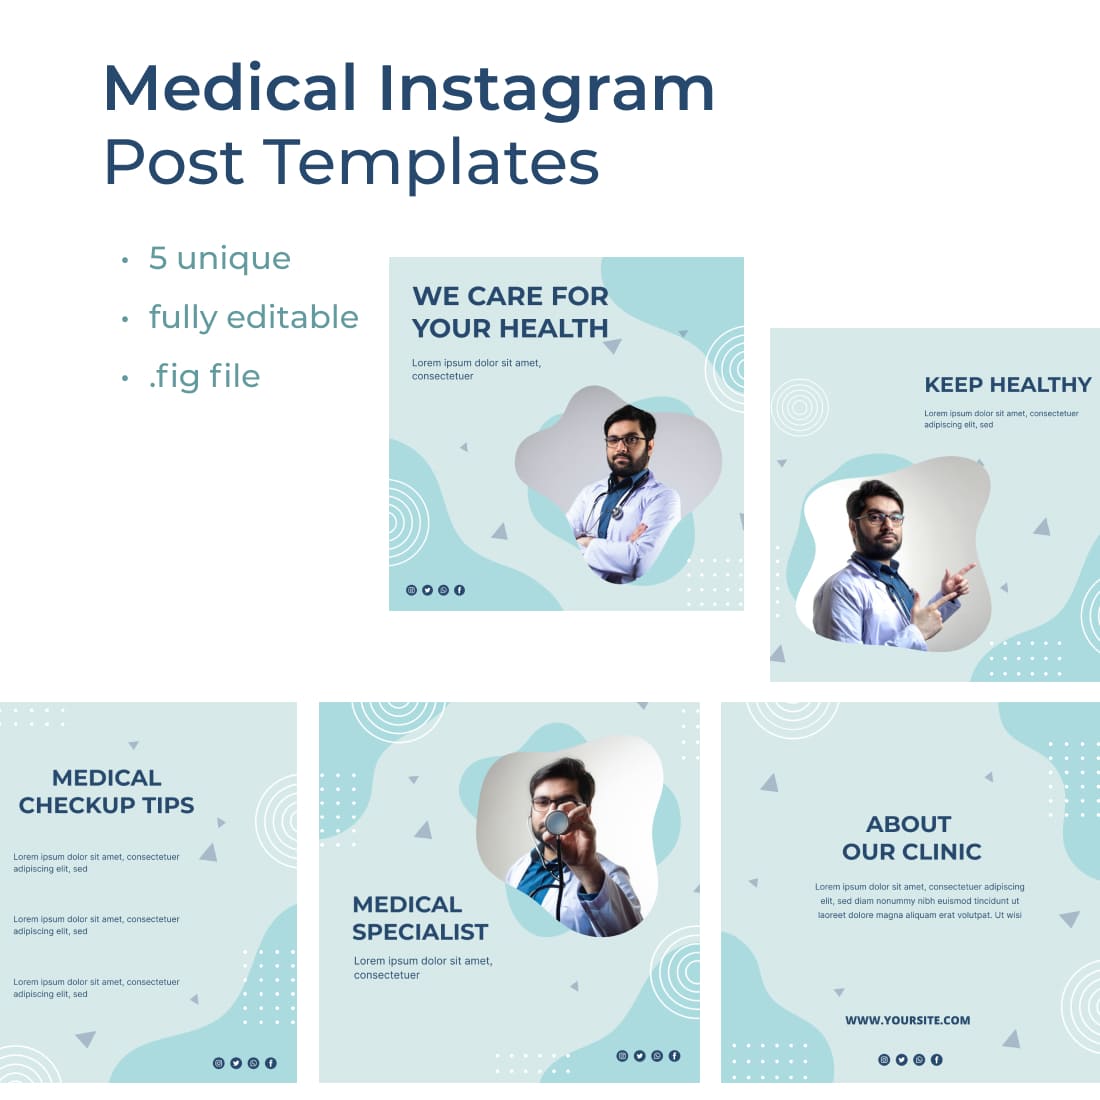 5 Medical Instagram Post Templates.